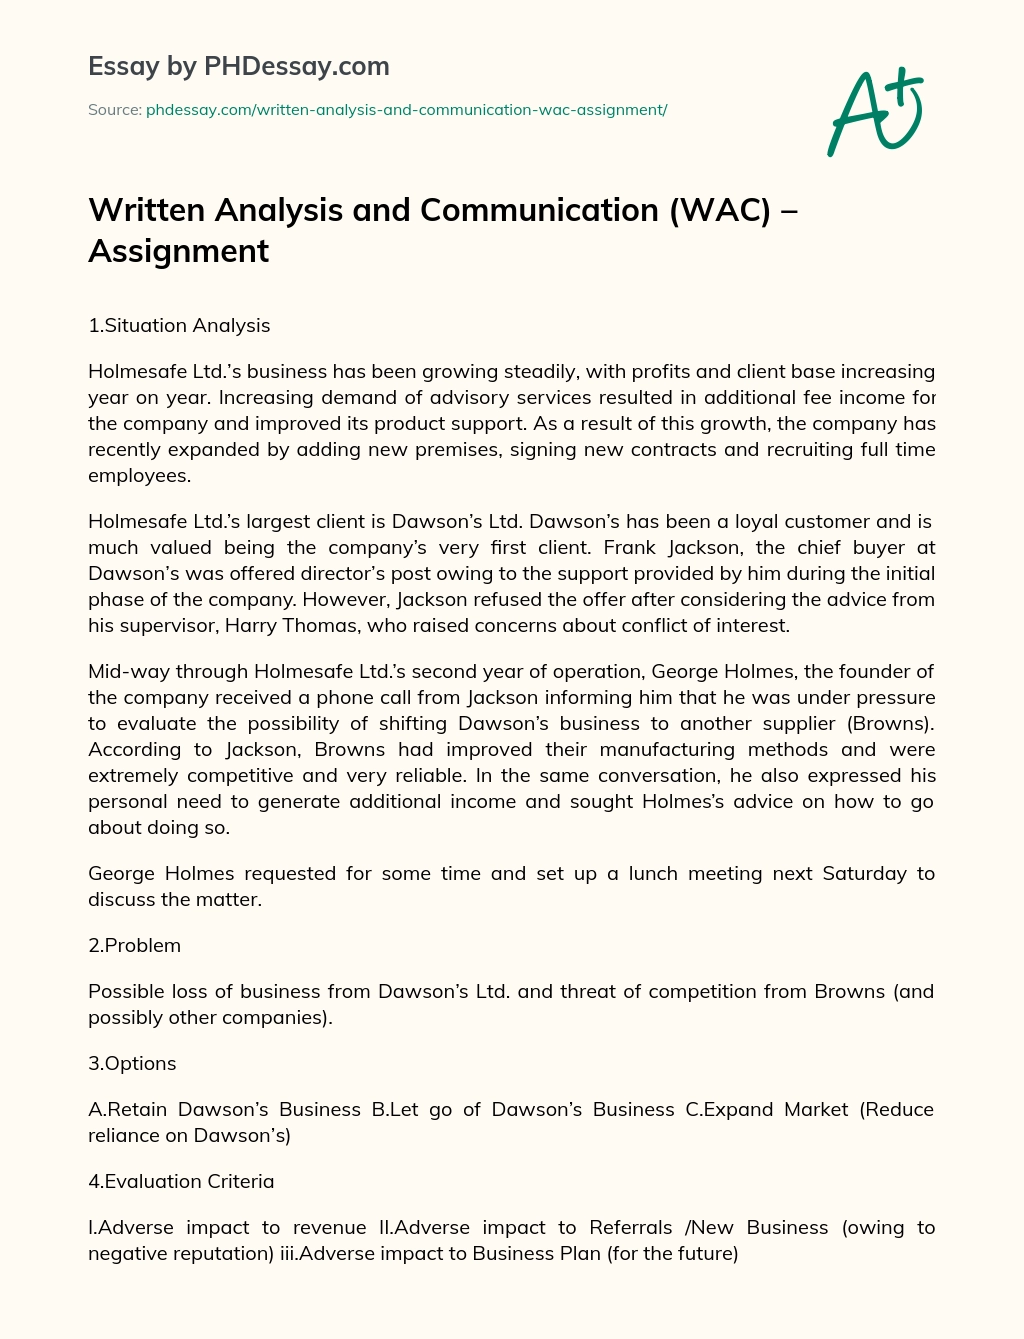 Written Analysis and Communication (WAC) – Assignment essay